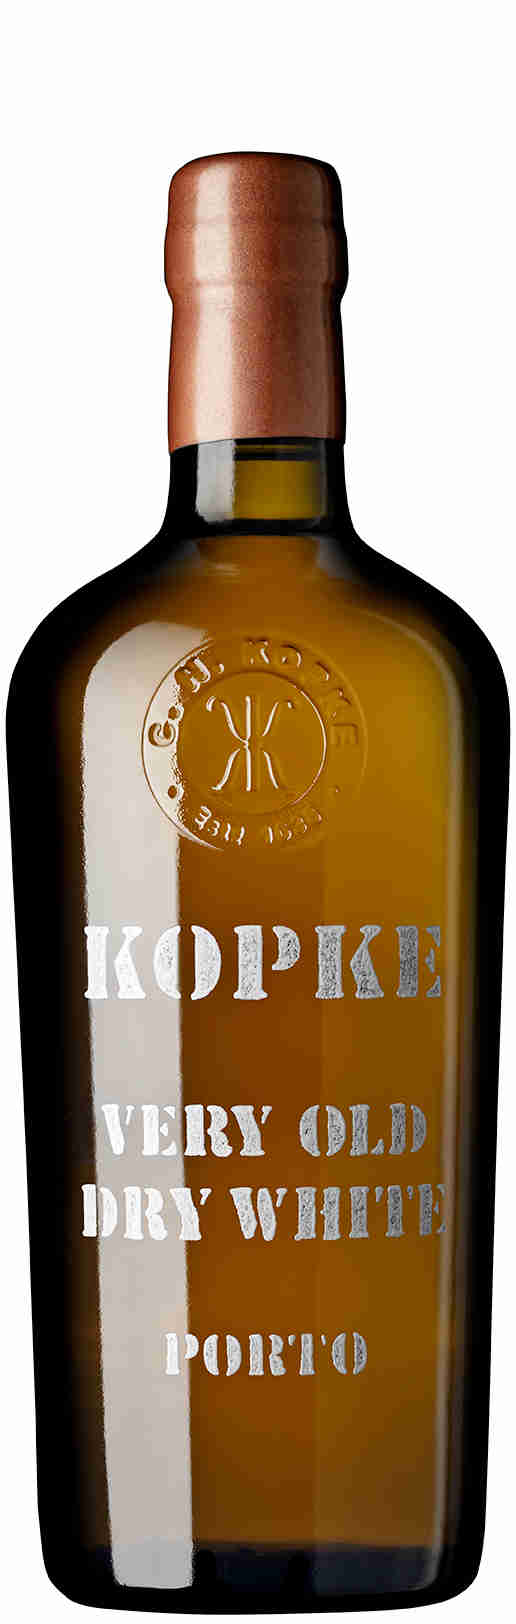 Kopke-Very-old-dry-White-Port